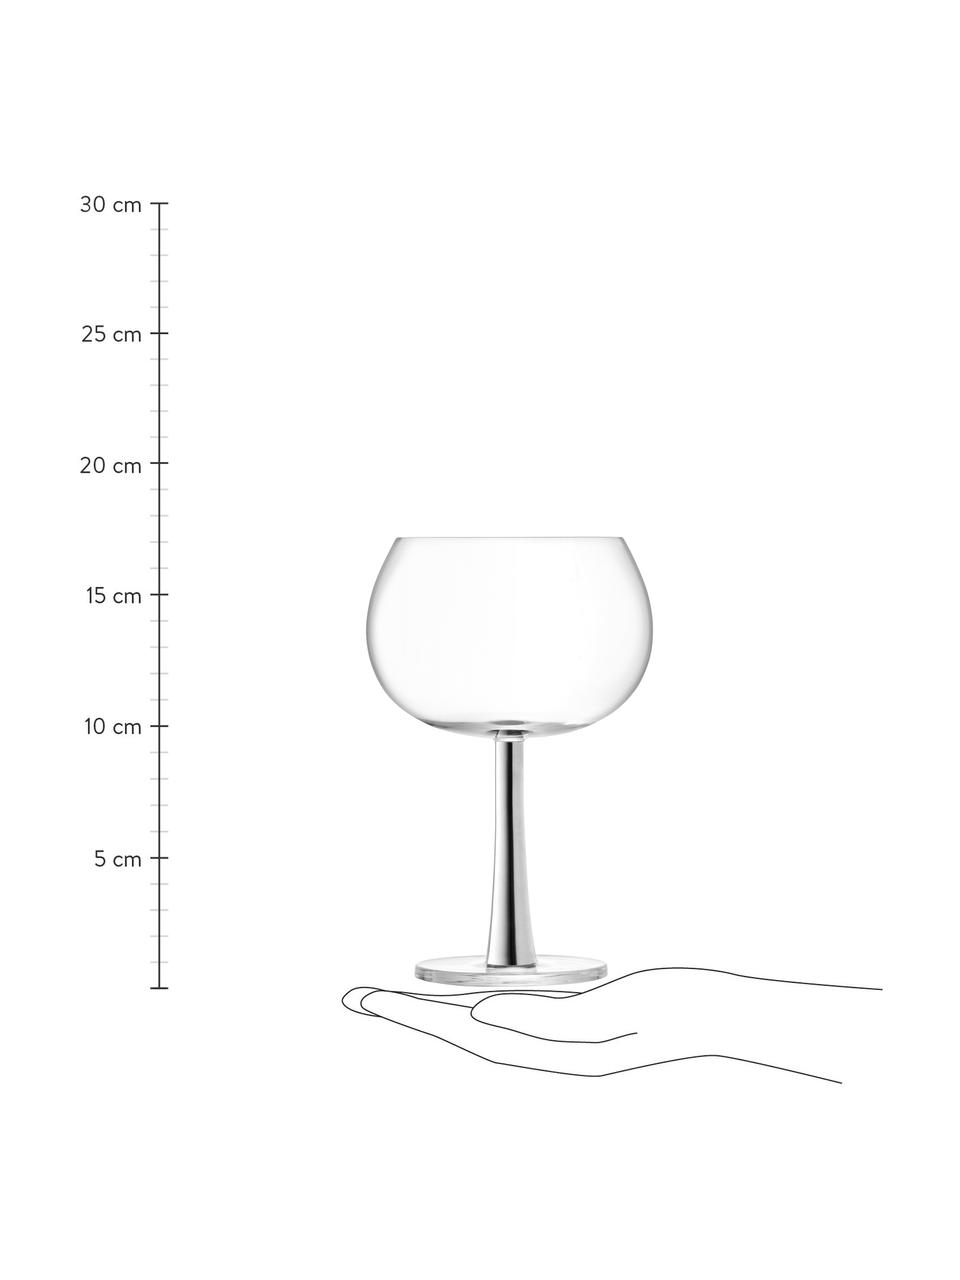 Bicchiere con manico argentato Gina 2 pz, Vetro, Trasparente, argentato, Ø 11 x Alt. 17 cm, 420 ml